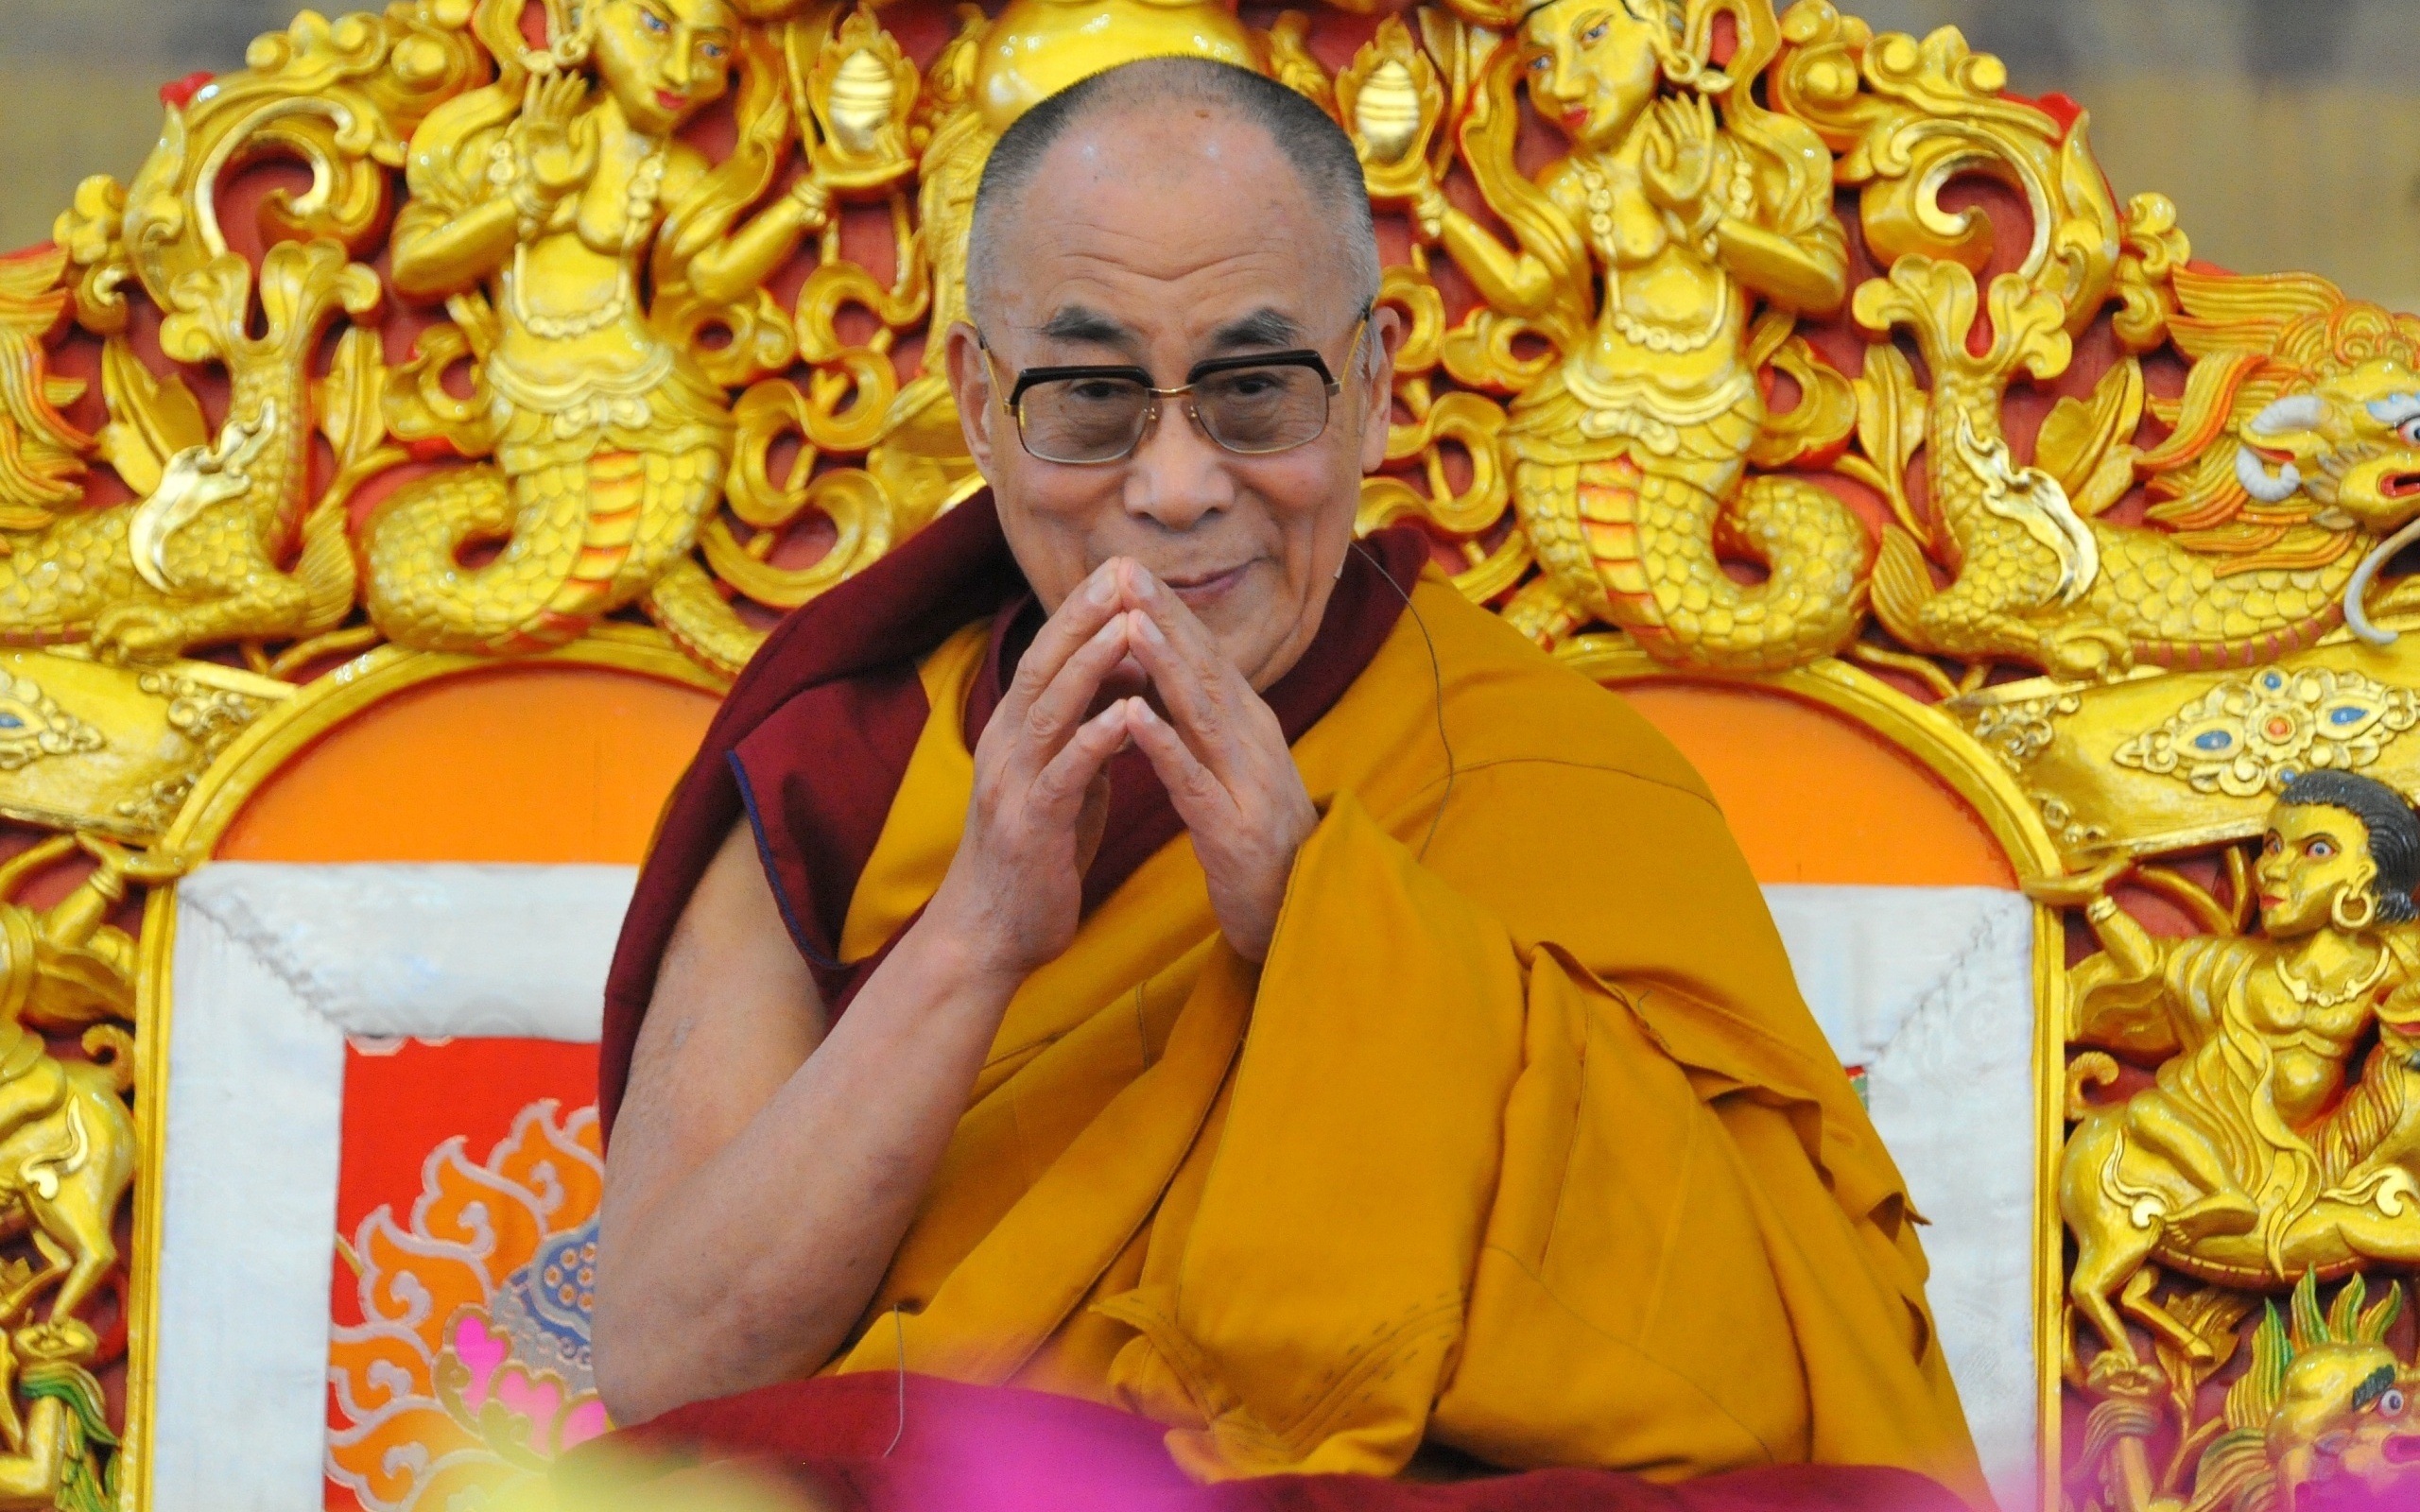 Dalai Lama: The leader and a monk of the Gelug school, the newest school of Tibetan Buddhism. 2560x1600 HD Wallpaper.